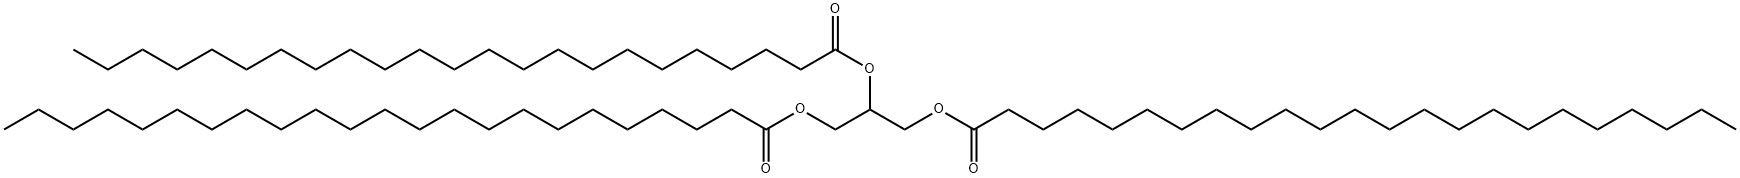 TRITRICOSANOIN|二十三烷酸甘油三酯